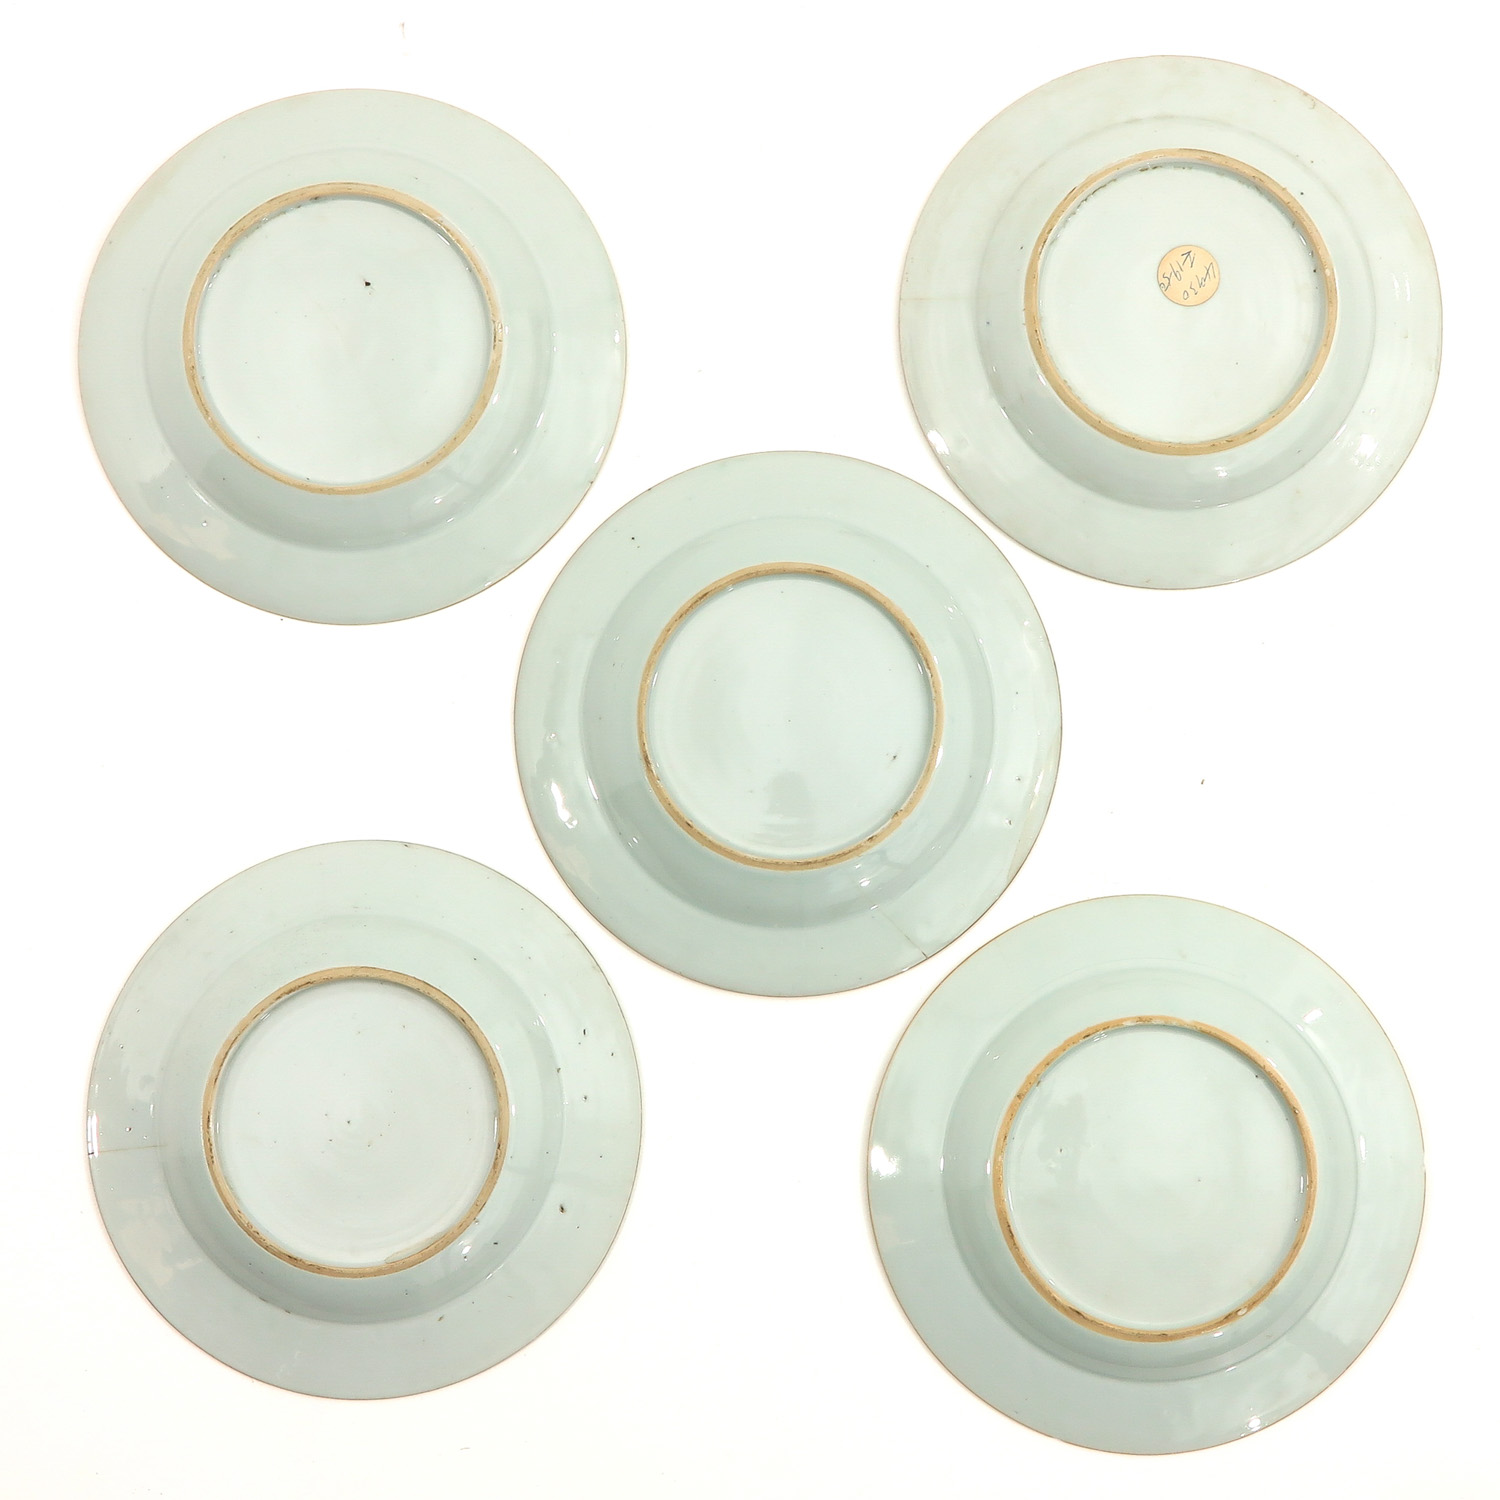 A Series of 5 Imari Plates - Image 2 of 9